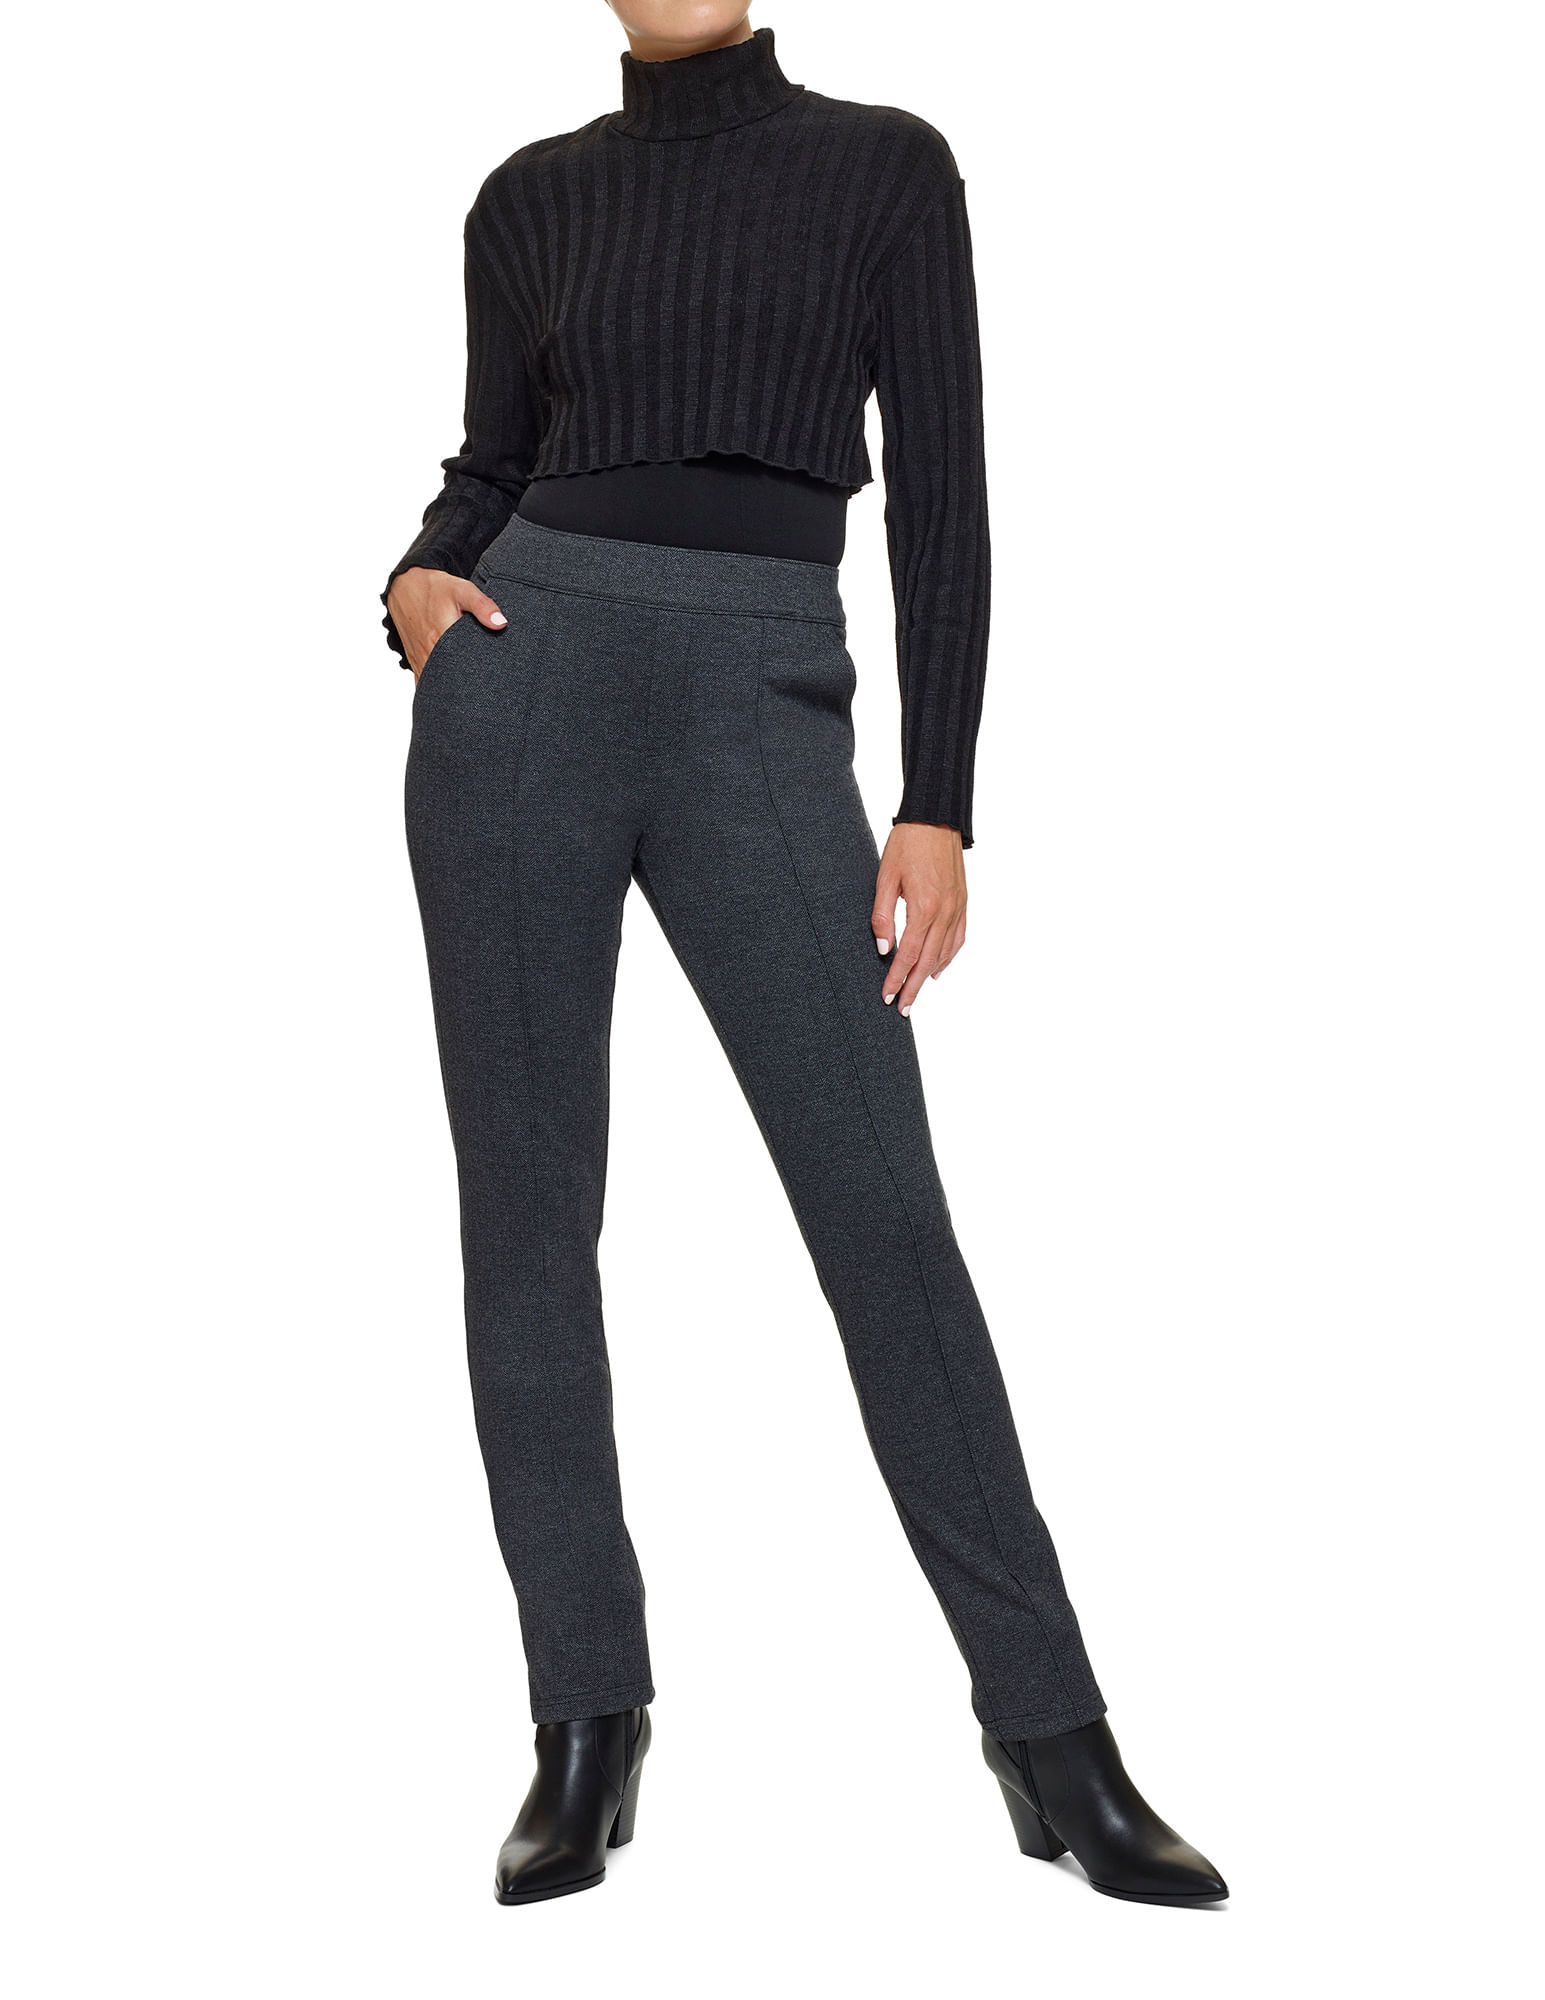 New HUE Black Stretch Pants Rayon Nylon/Spandex SpaWorking Out